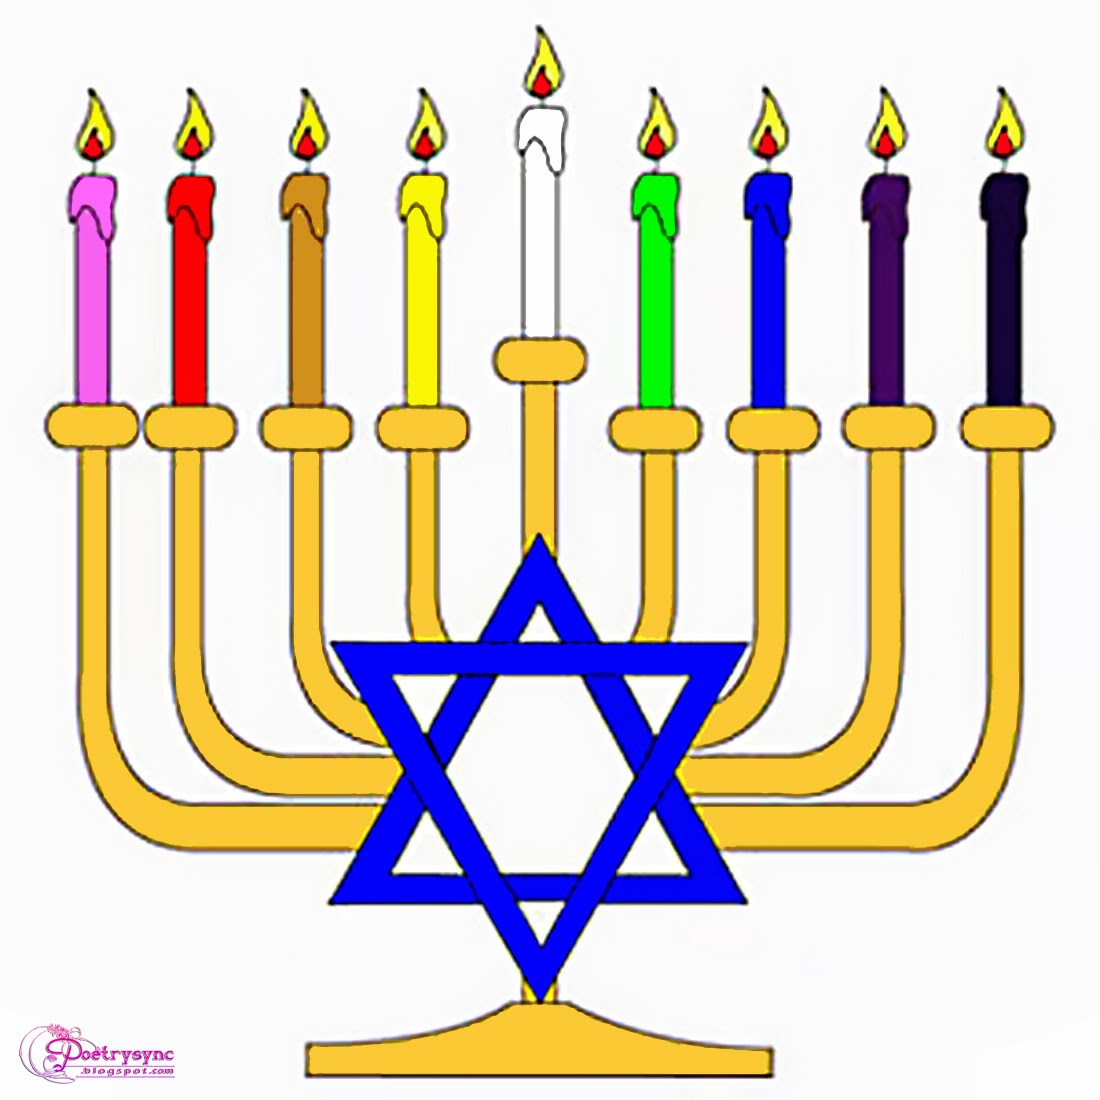 hanukkah-symbols-clipart-10-free-cliparts-download-images-on